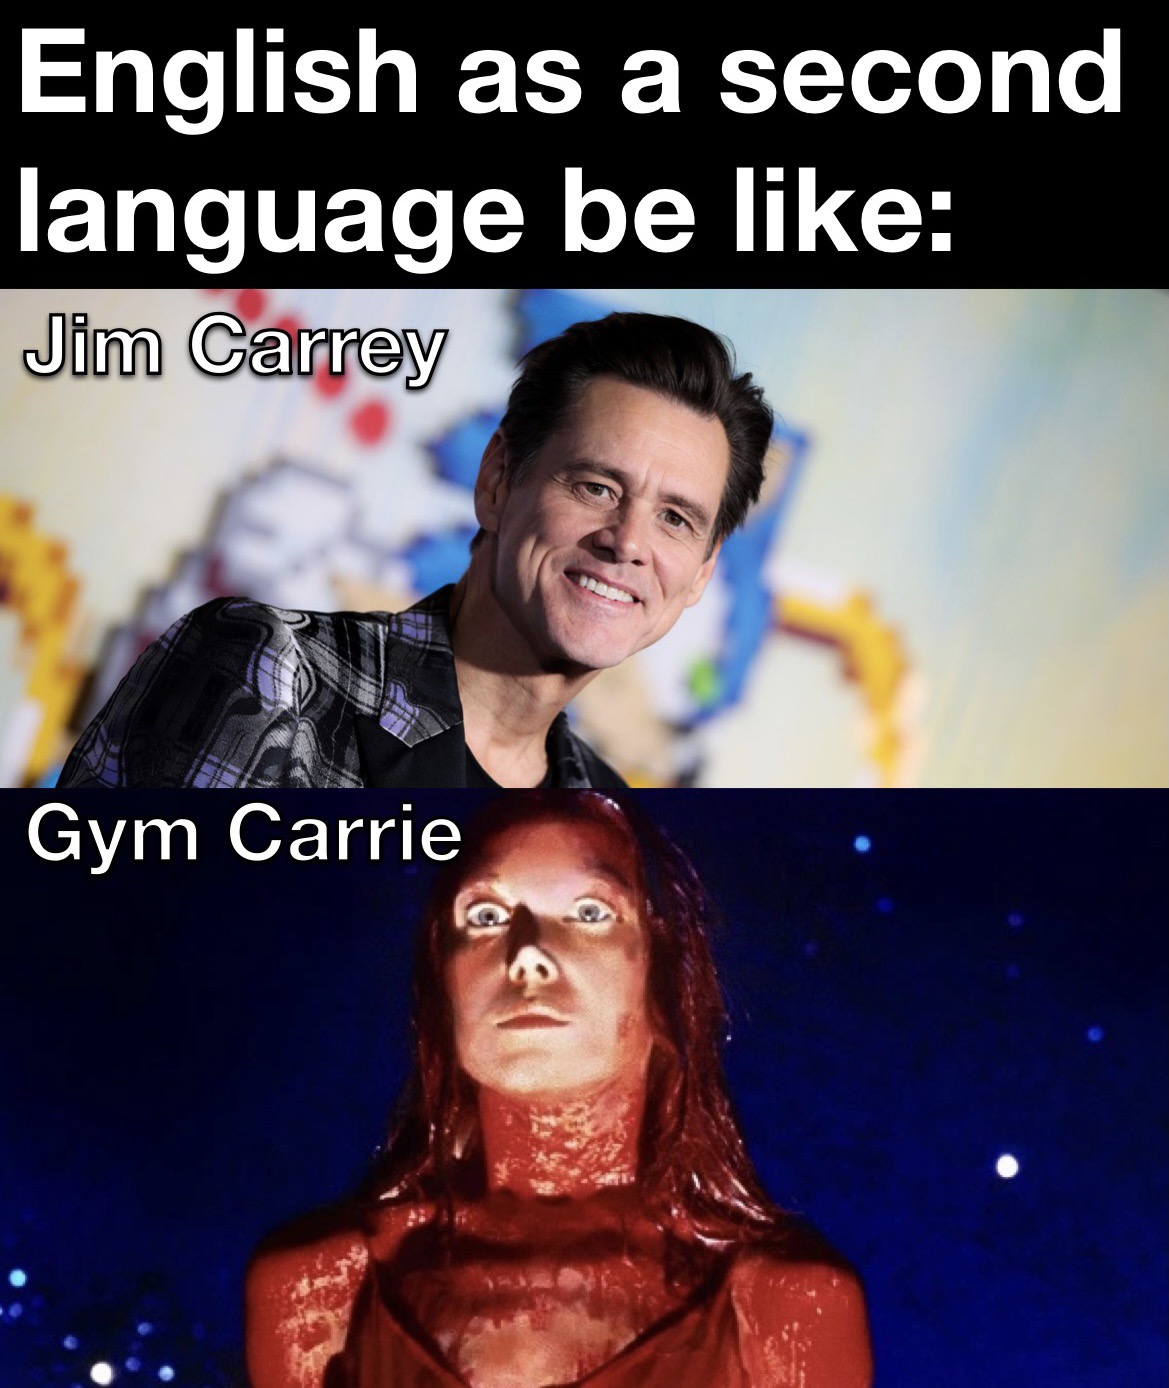 dank memes - funny memes - Jim Carrey - English as a second language be Jim Carrey Gym Carrie